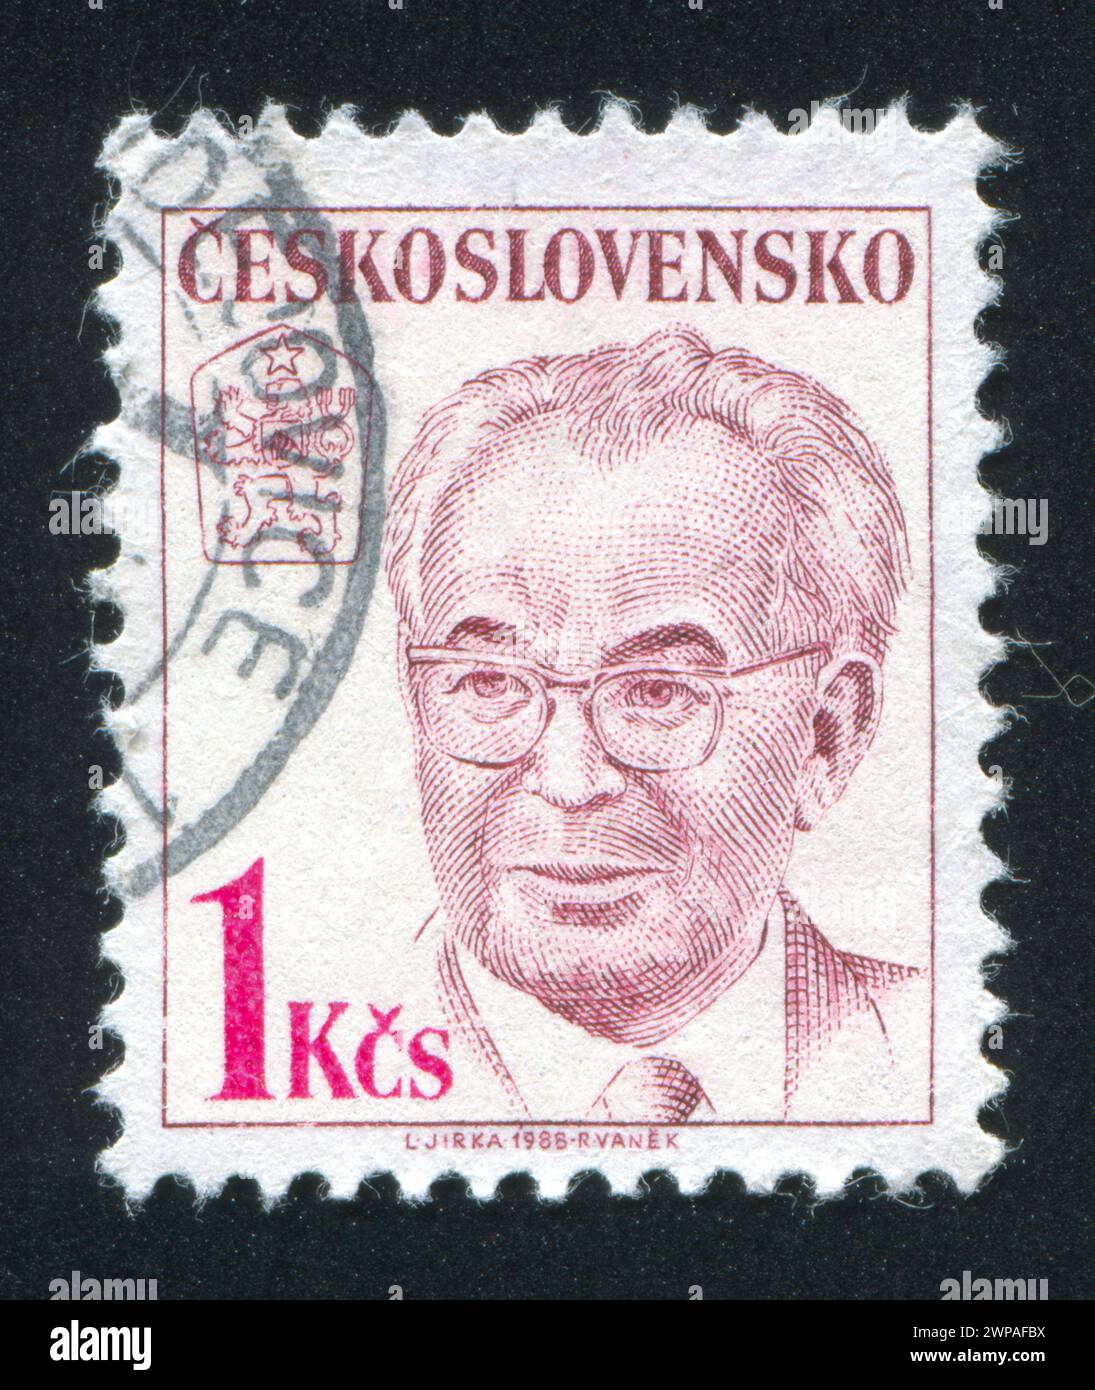 CZECHOSLOVAKIA - CIRCA 1983: stamp printed by Czechoslovakia, shows Gustav Husak, circa 1983 Stock Photo